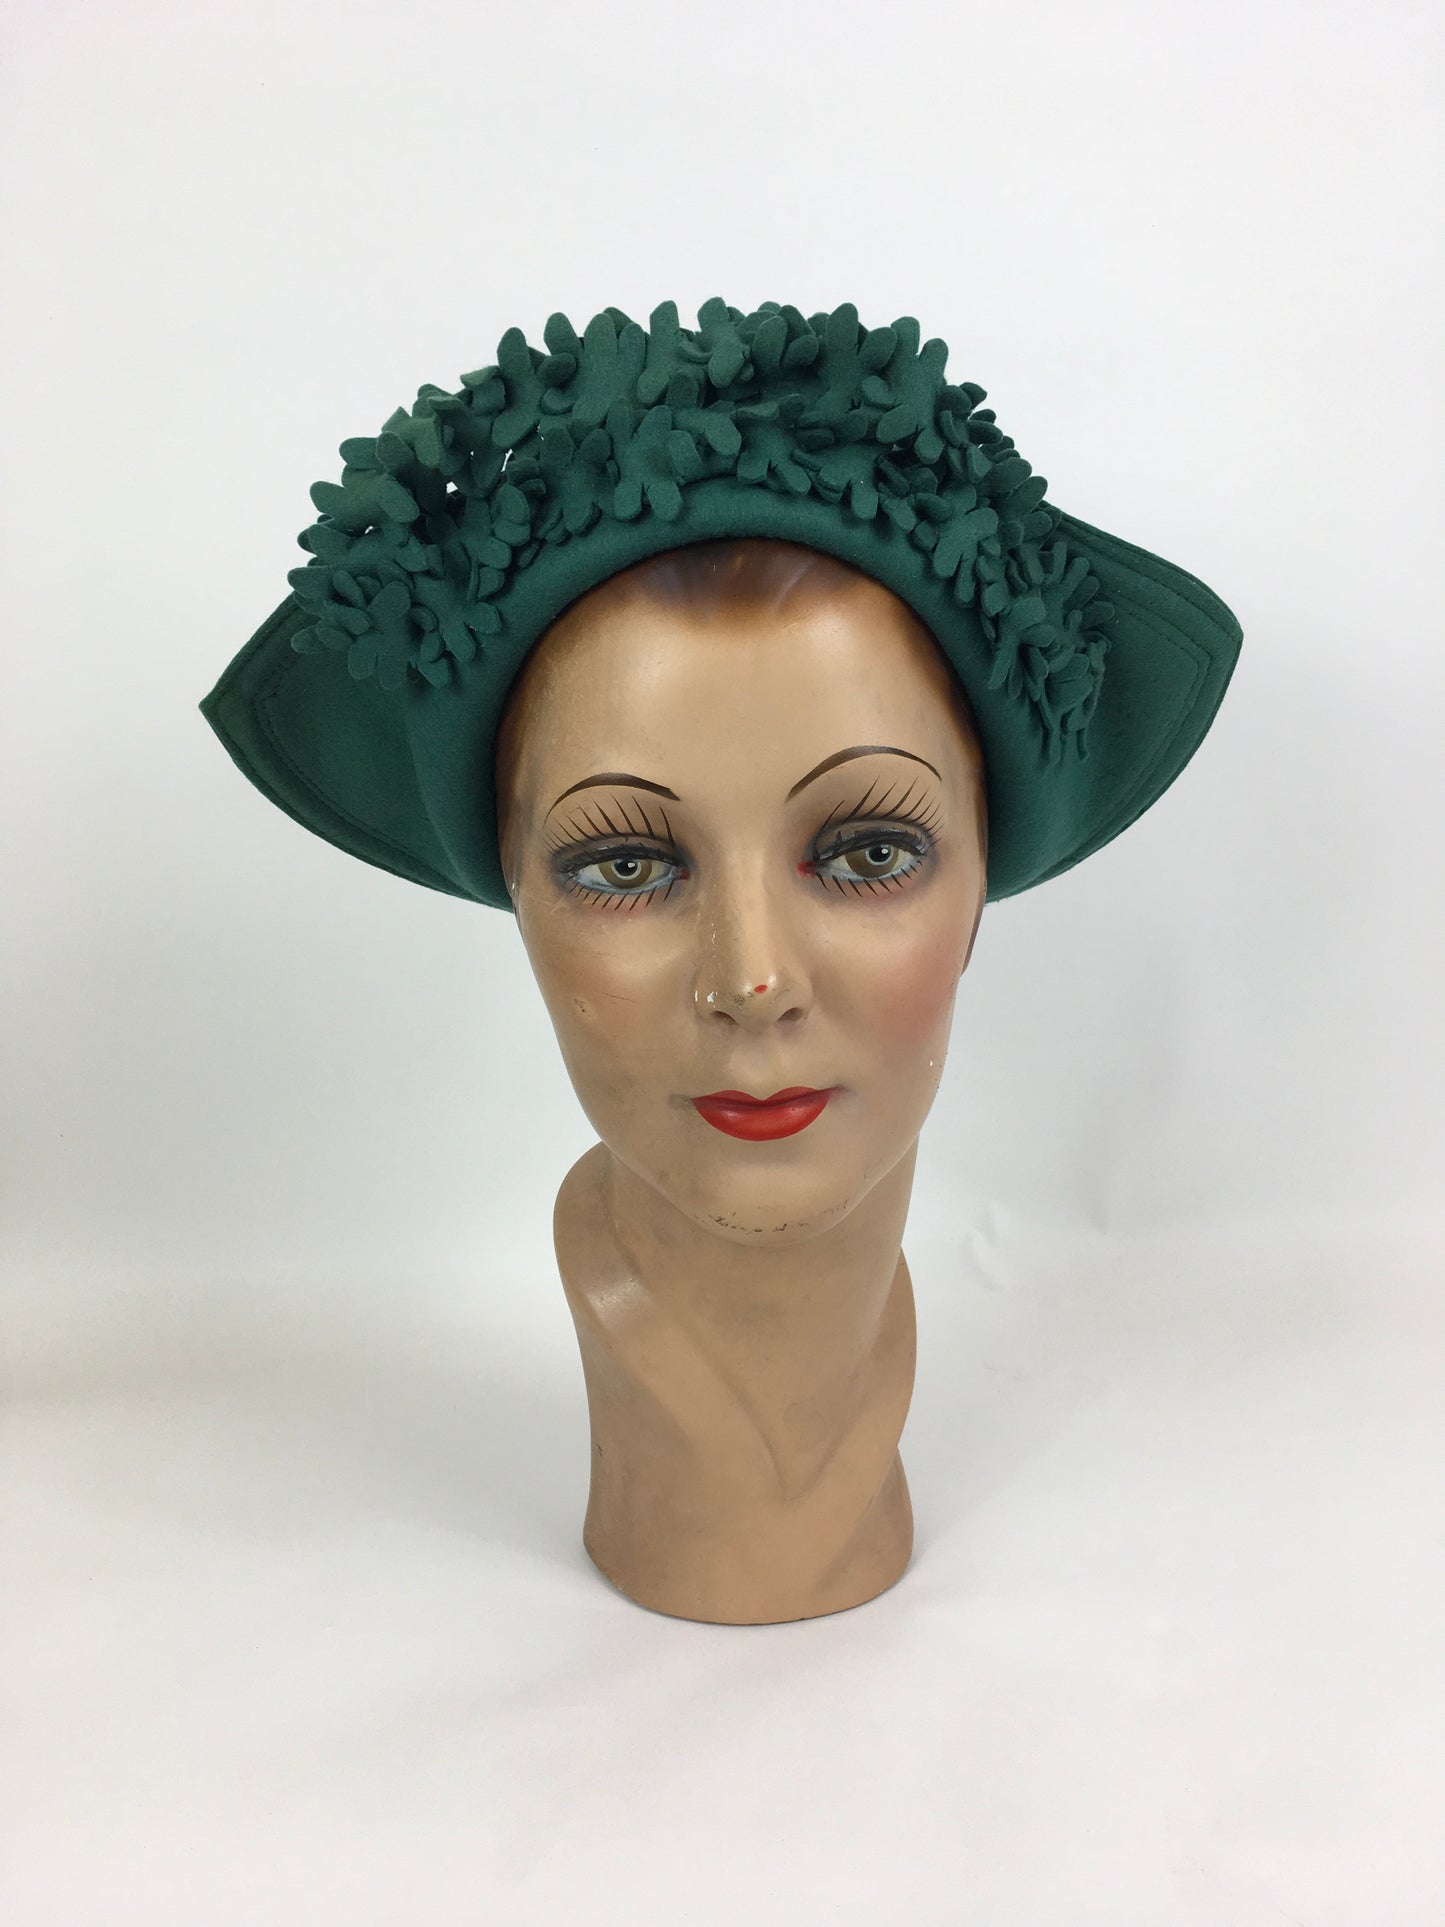 Original 1940’s Stunning Felt Hat with Floral Trails - In A Soft Eau De Nil Green